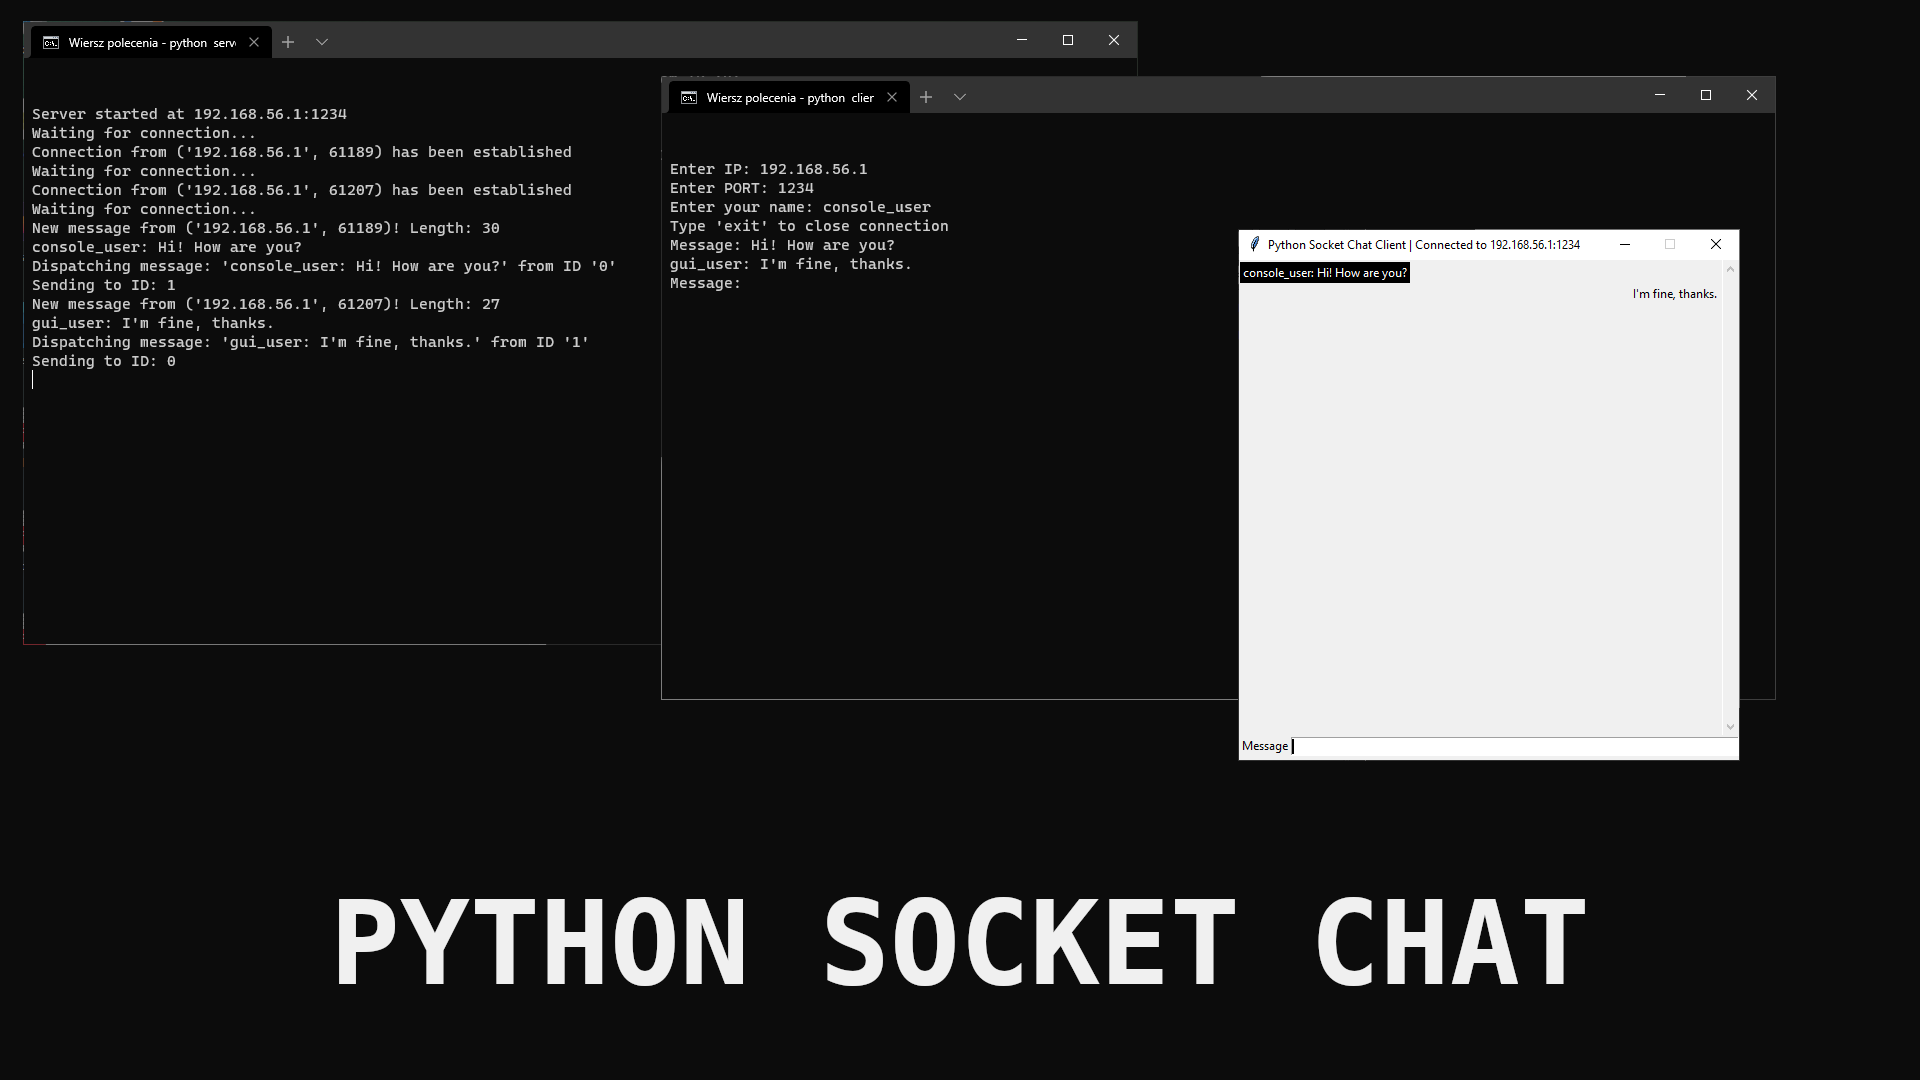 Python socket chat image